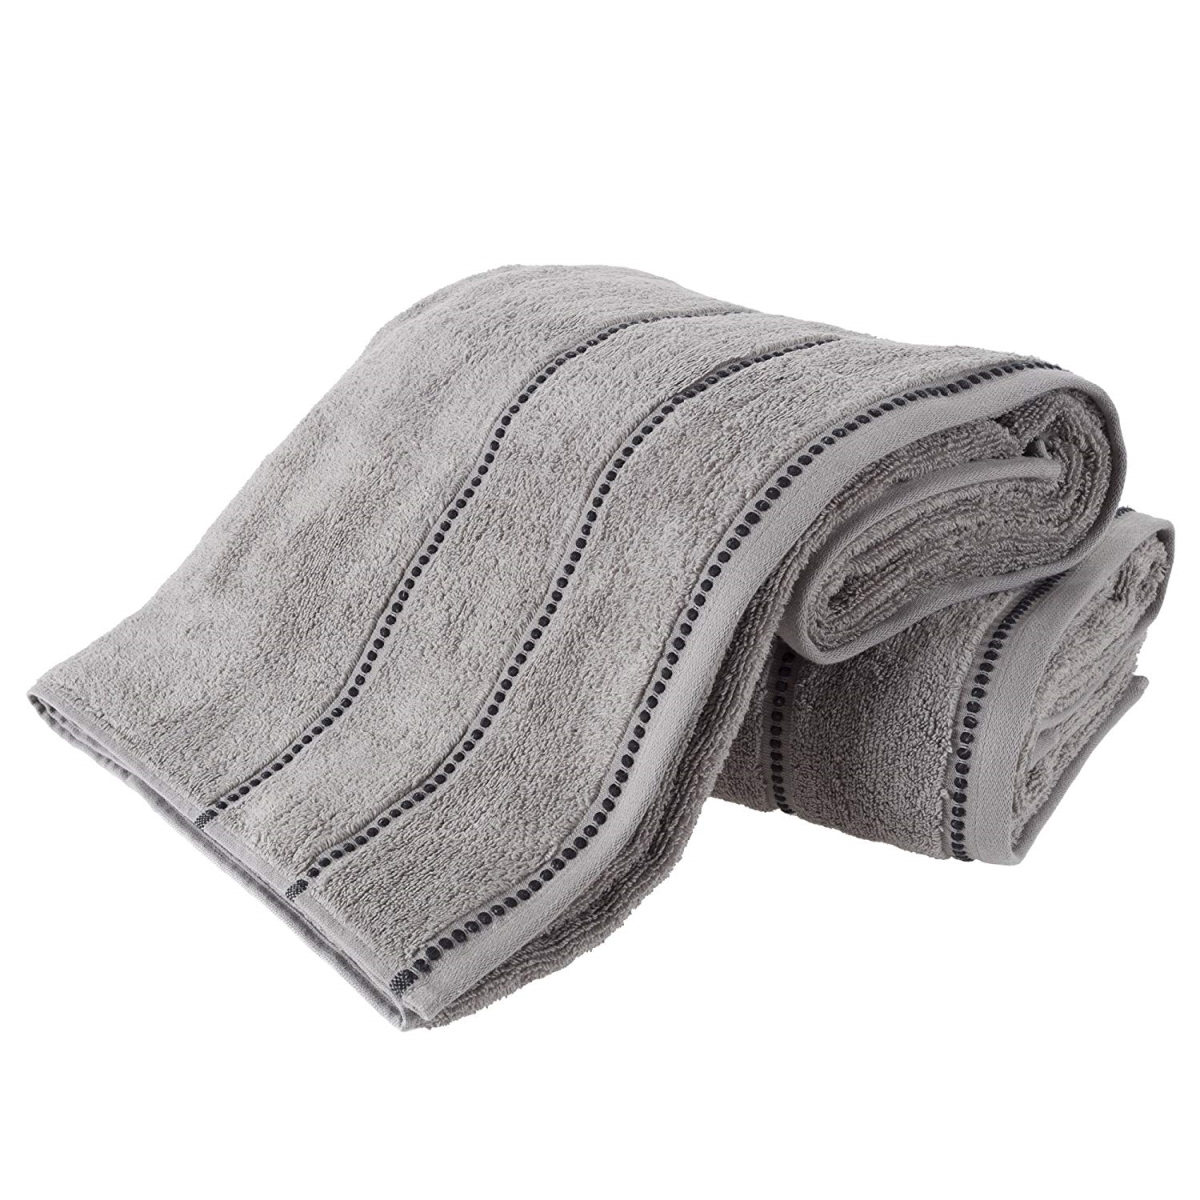 67a-82696 Luxury Cotton Towel Set, Silver & Black - 2 Piece